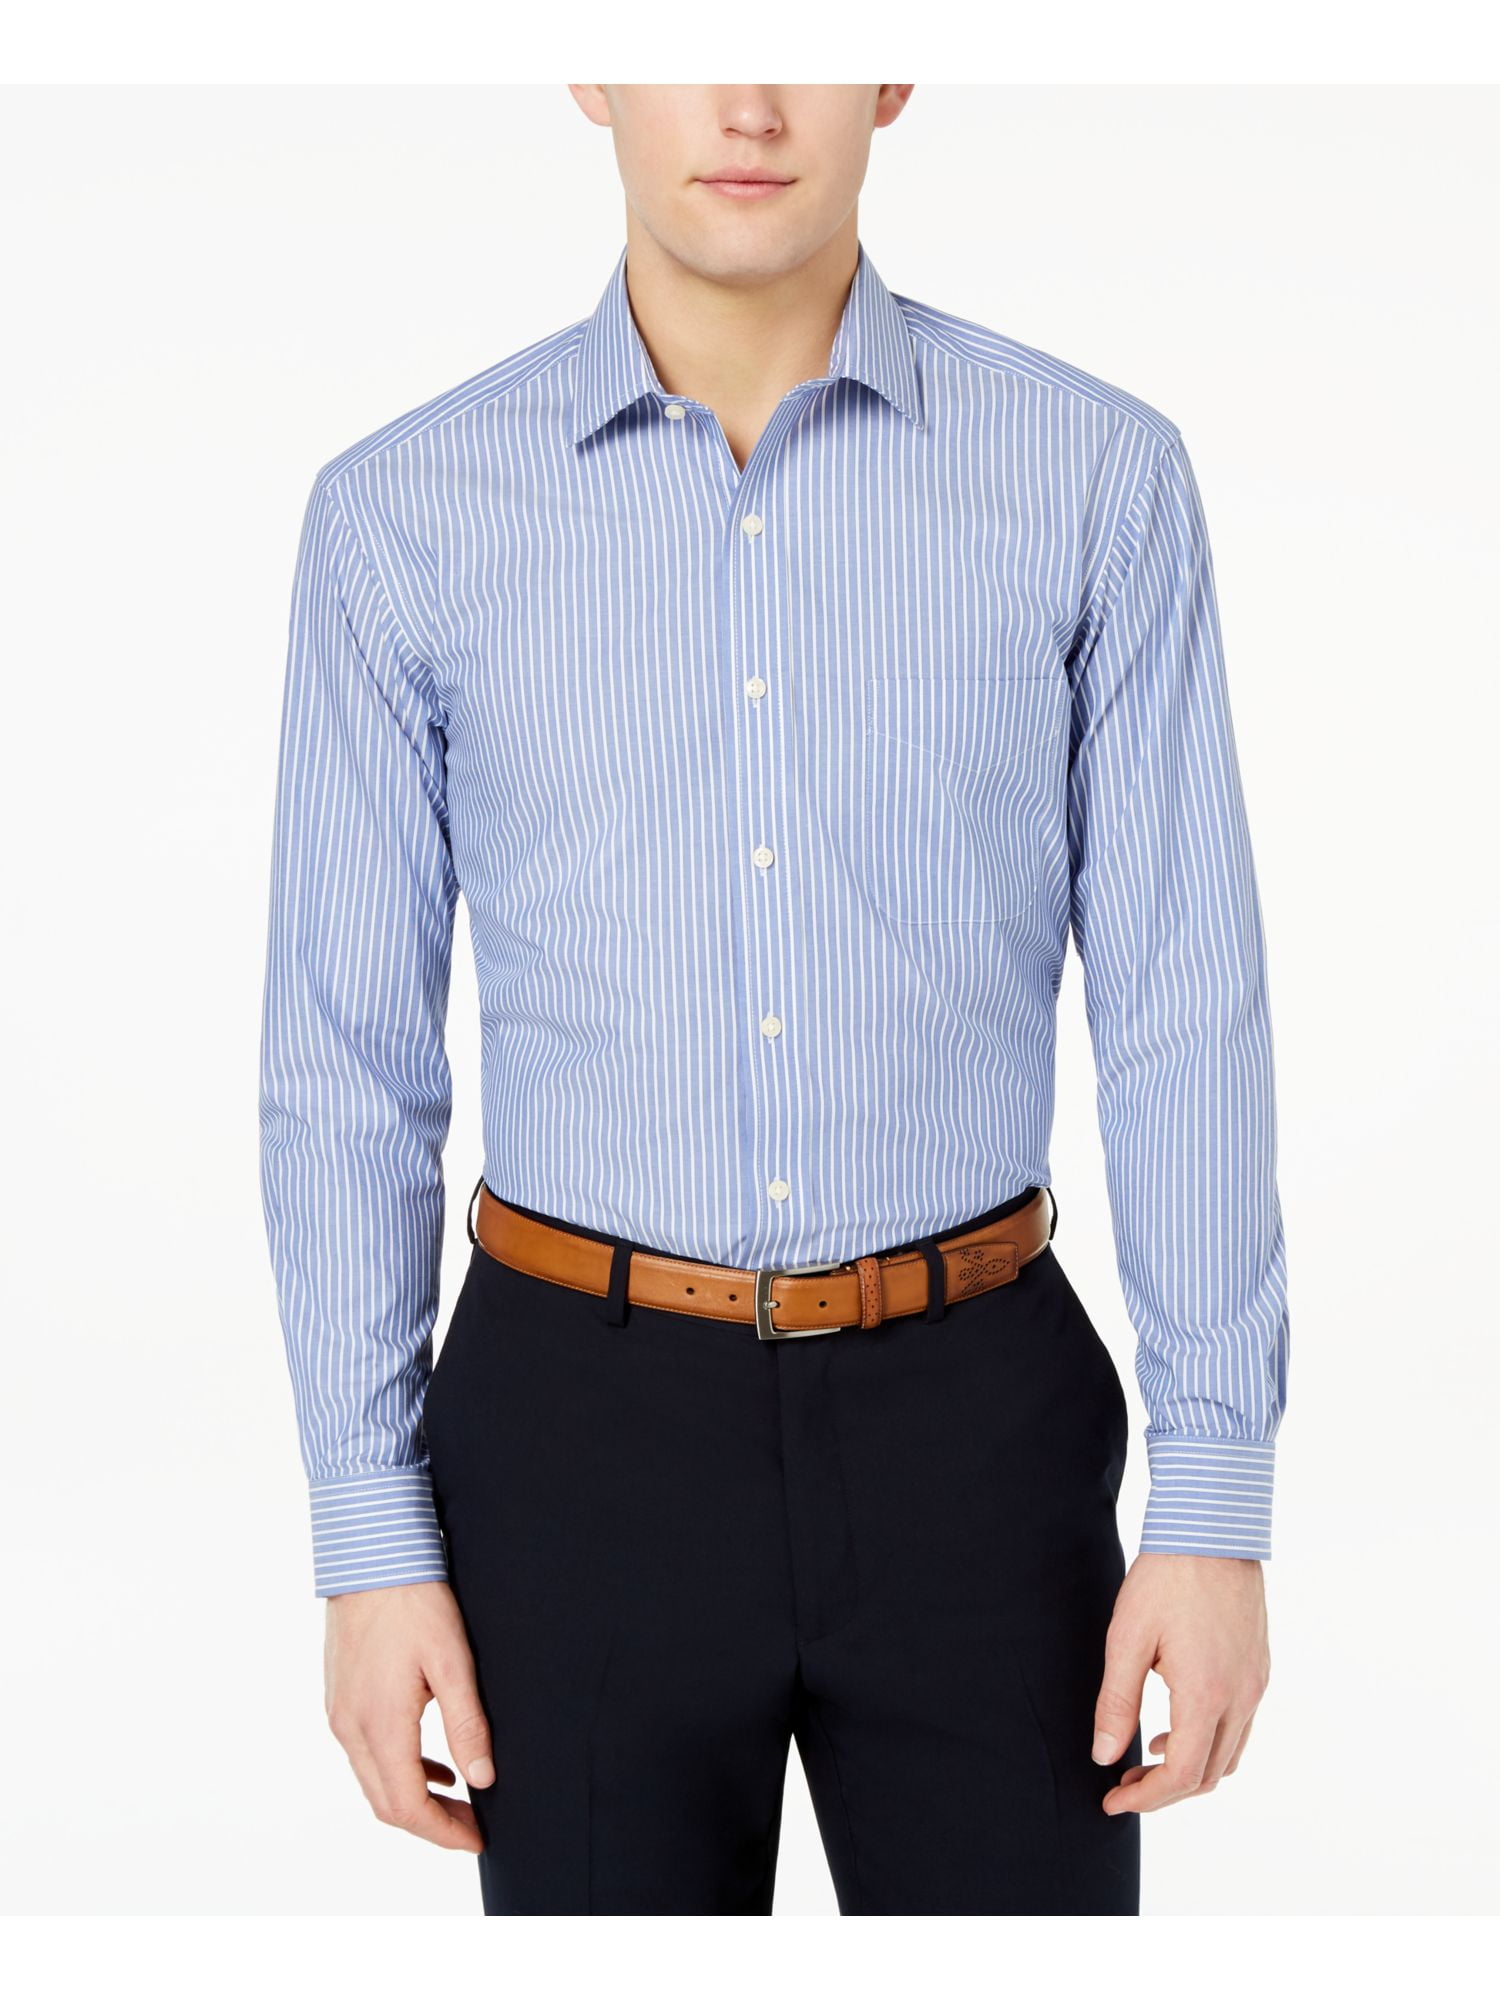 CLUBROOM Mens Light Blue Striped Collared Dress Shirt XL 17- 34/35